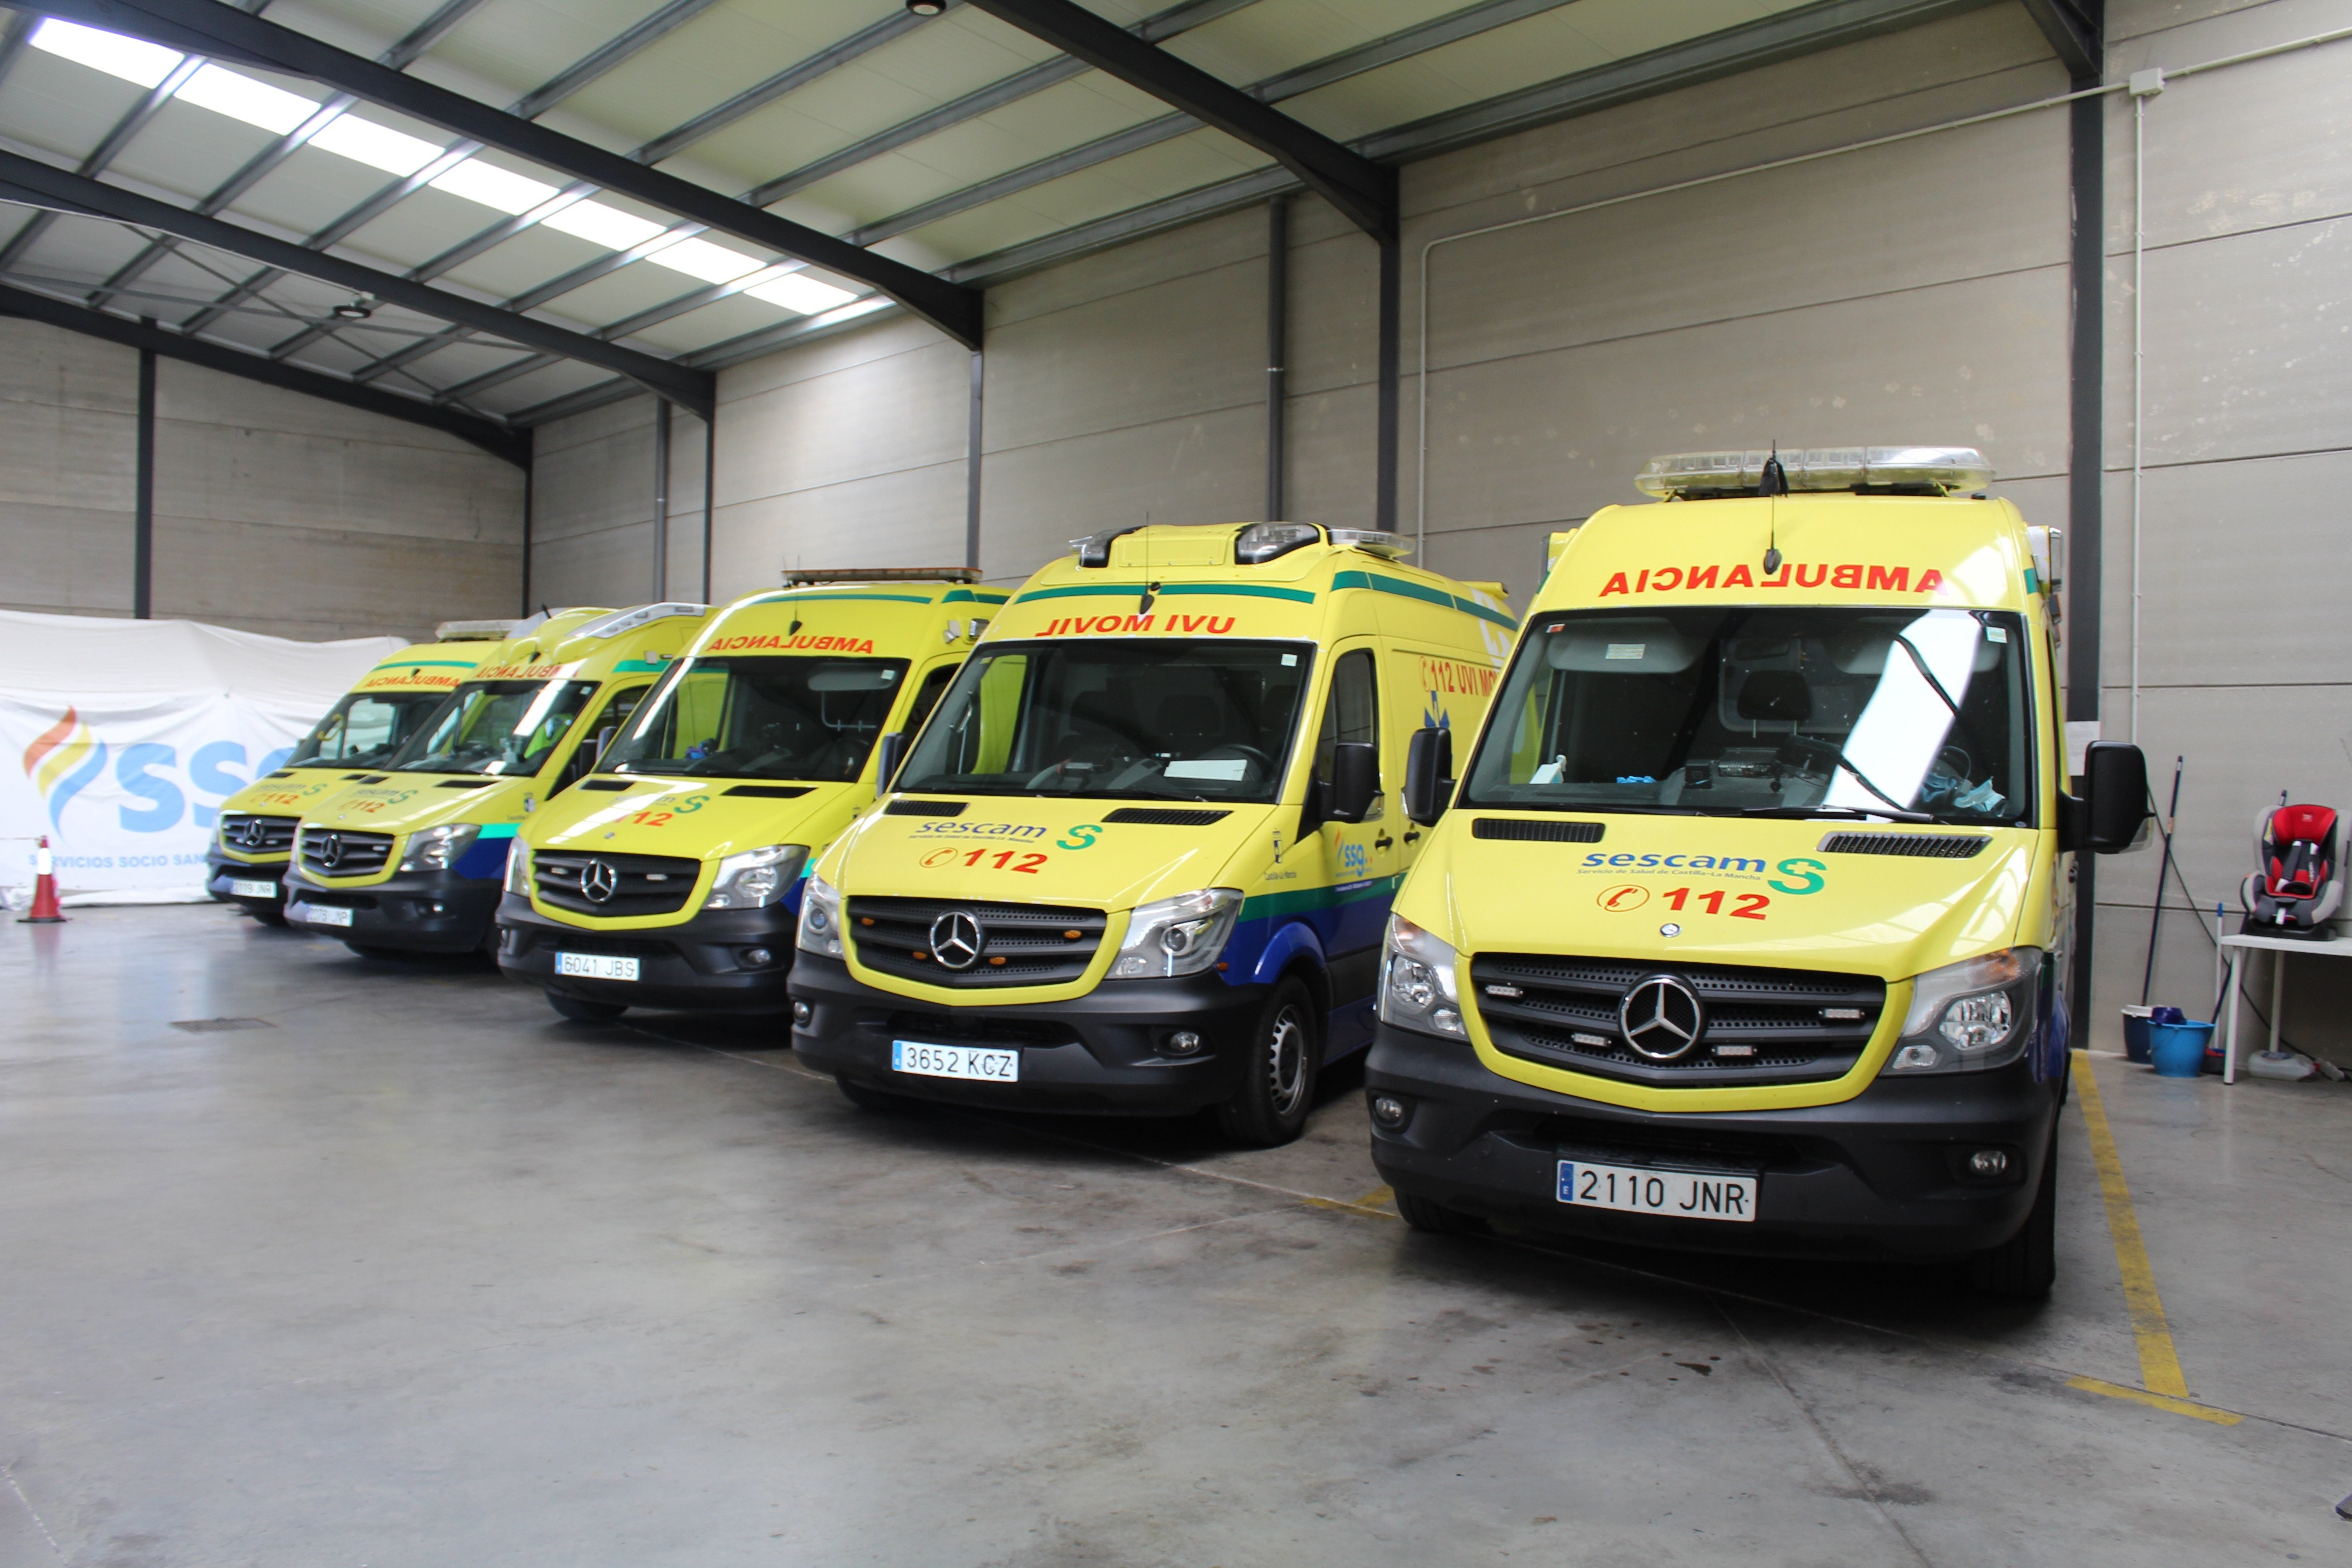 EuropaPress 3297734 ambulancias